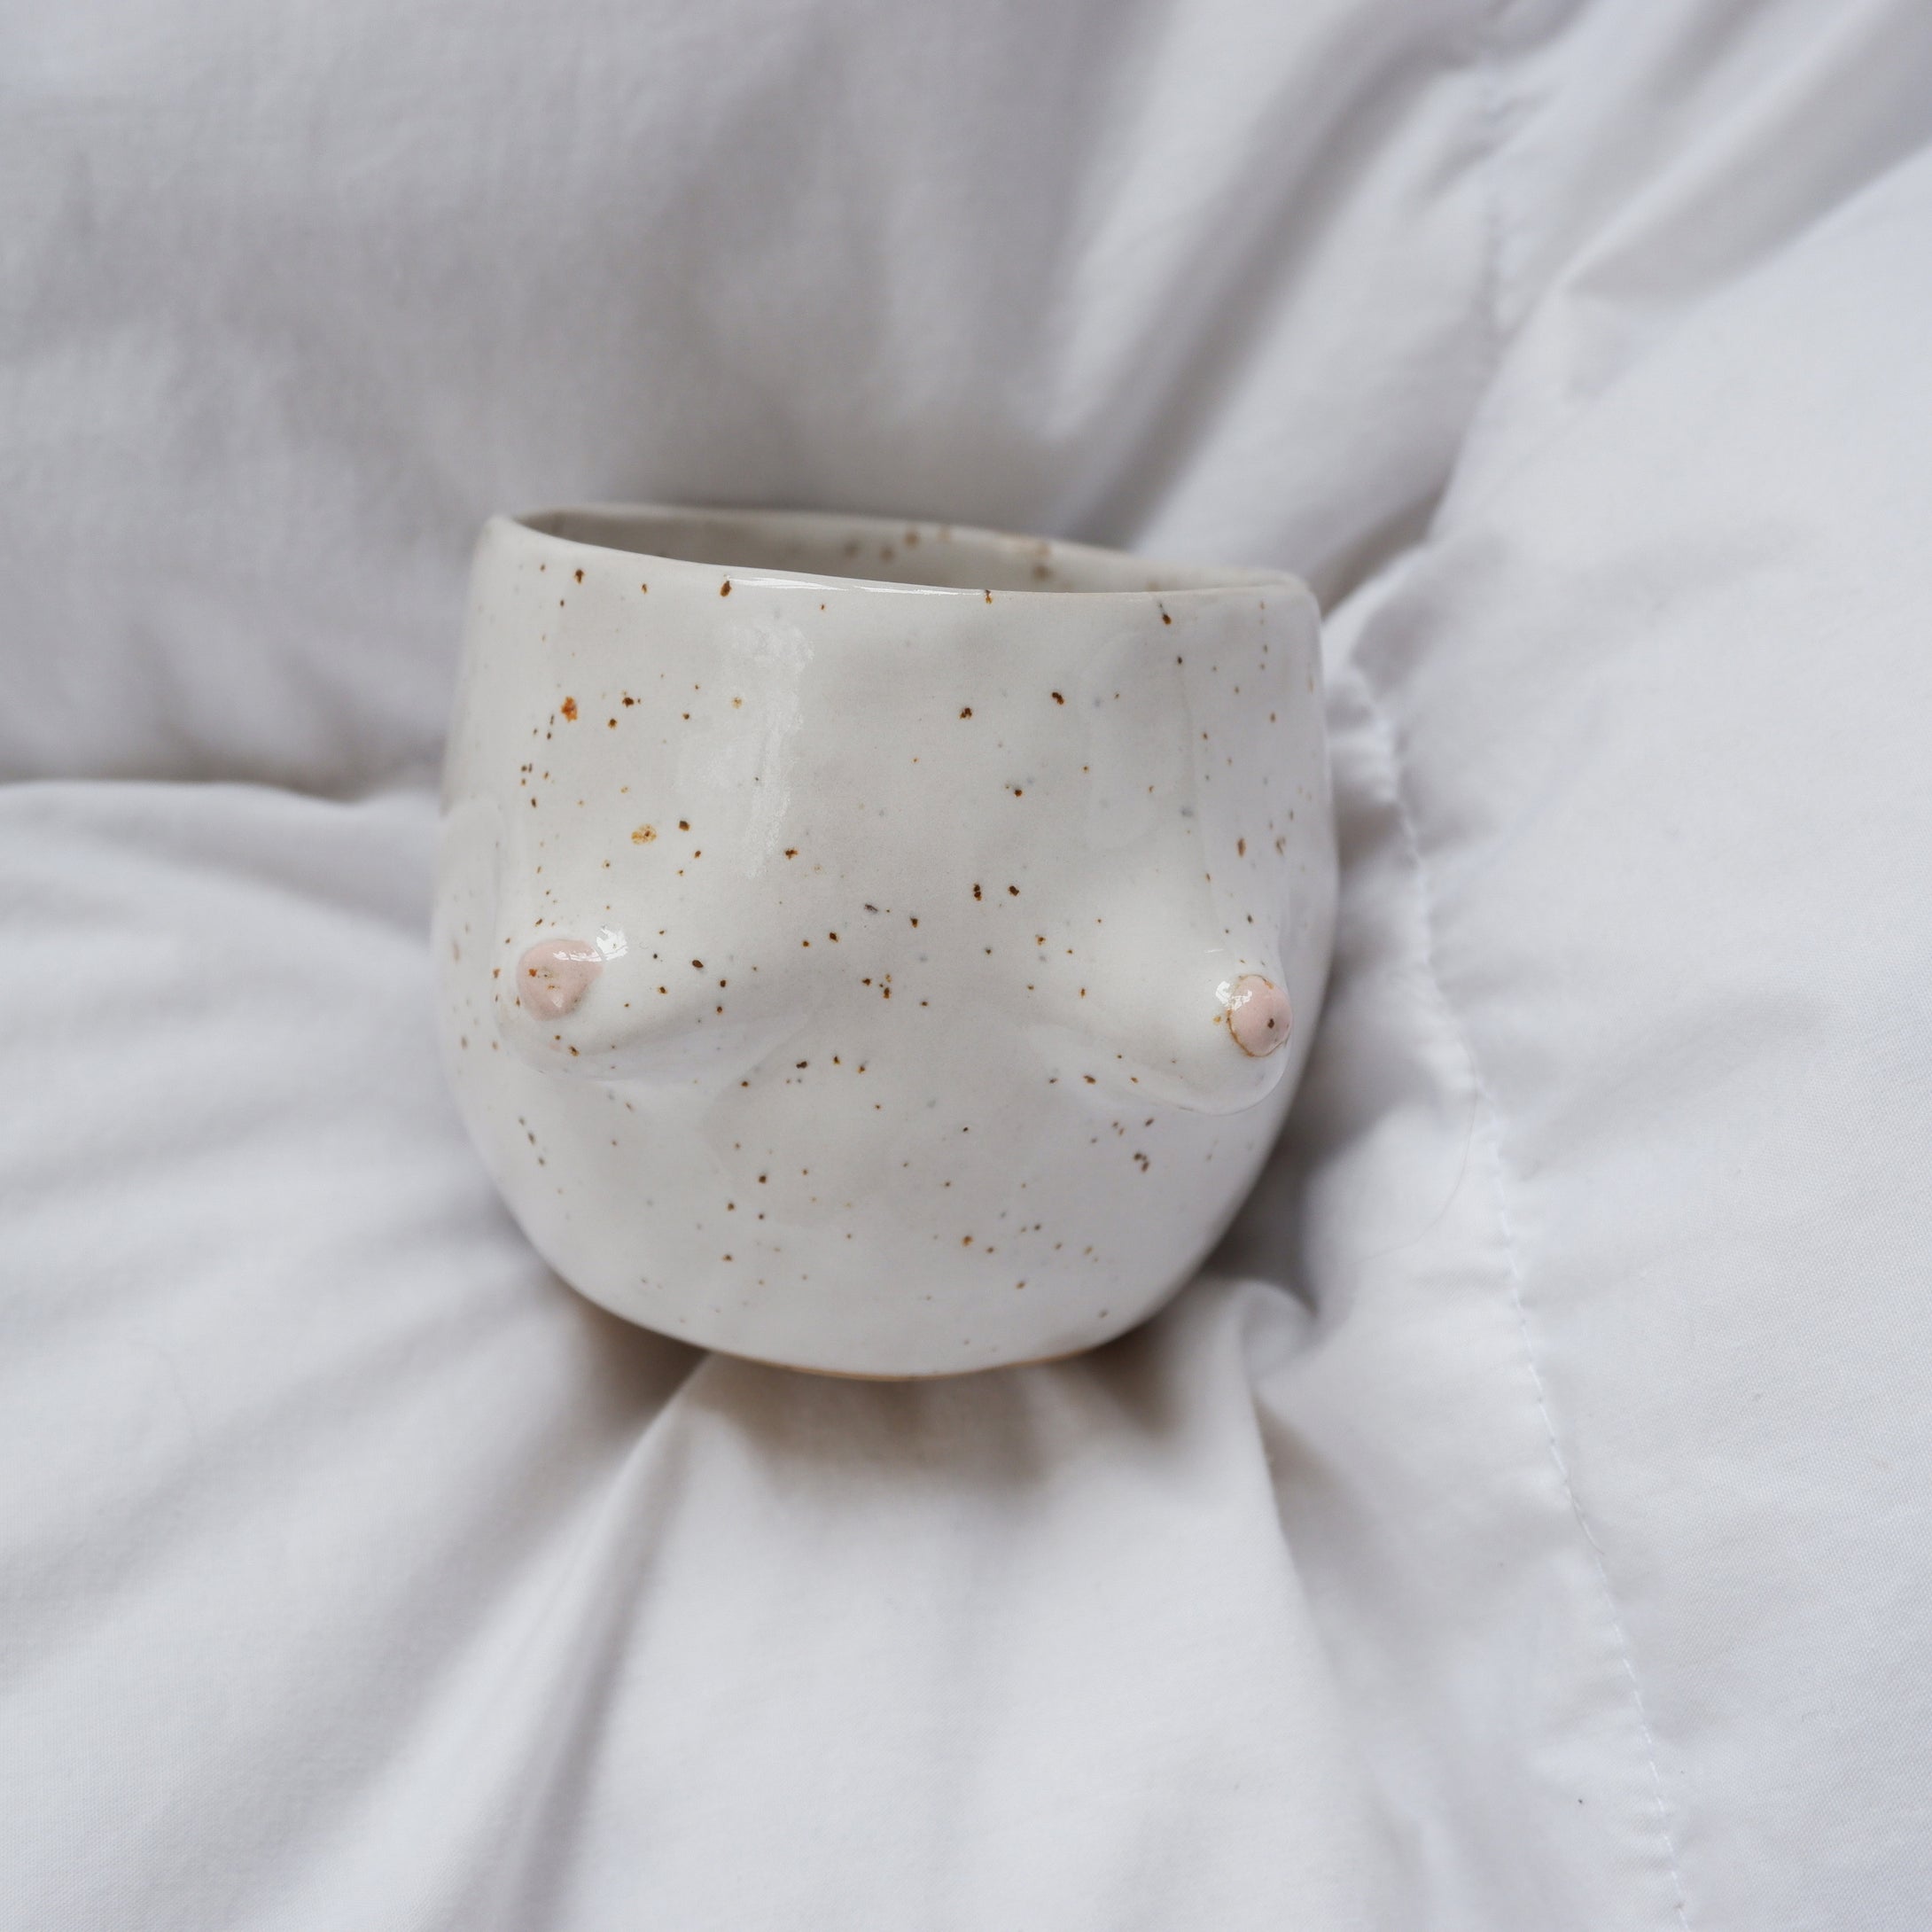 Speckled white mugs